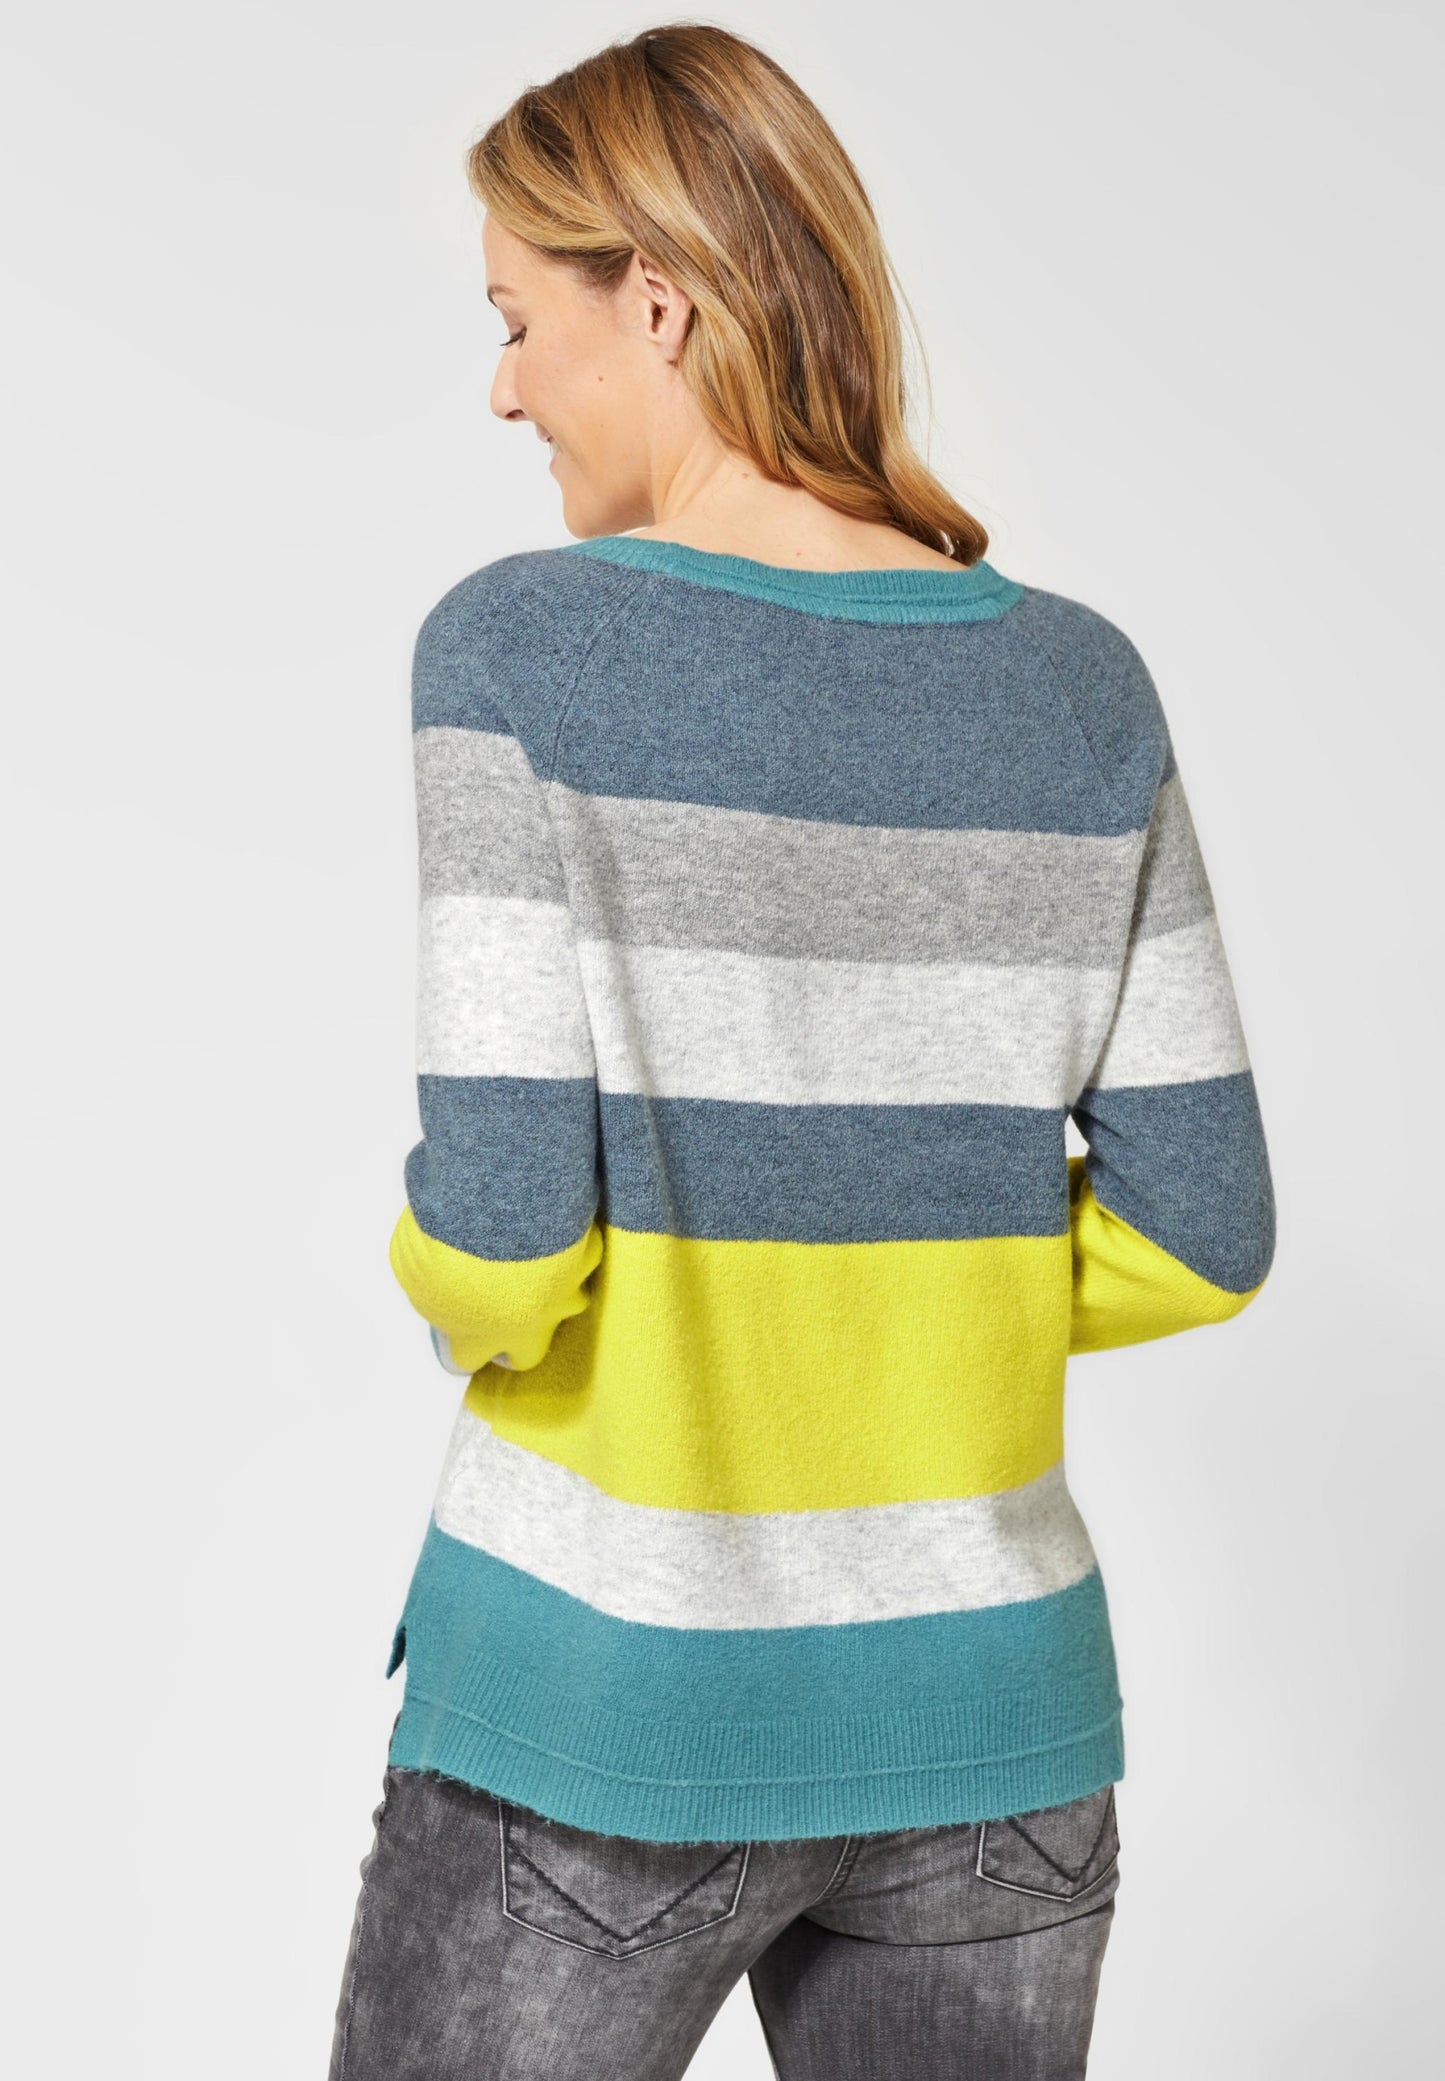 Block stripe sweater